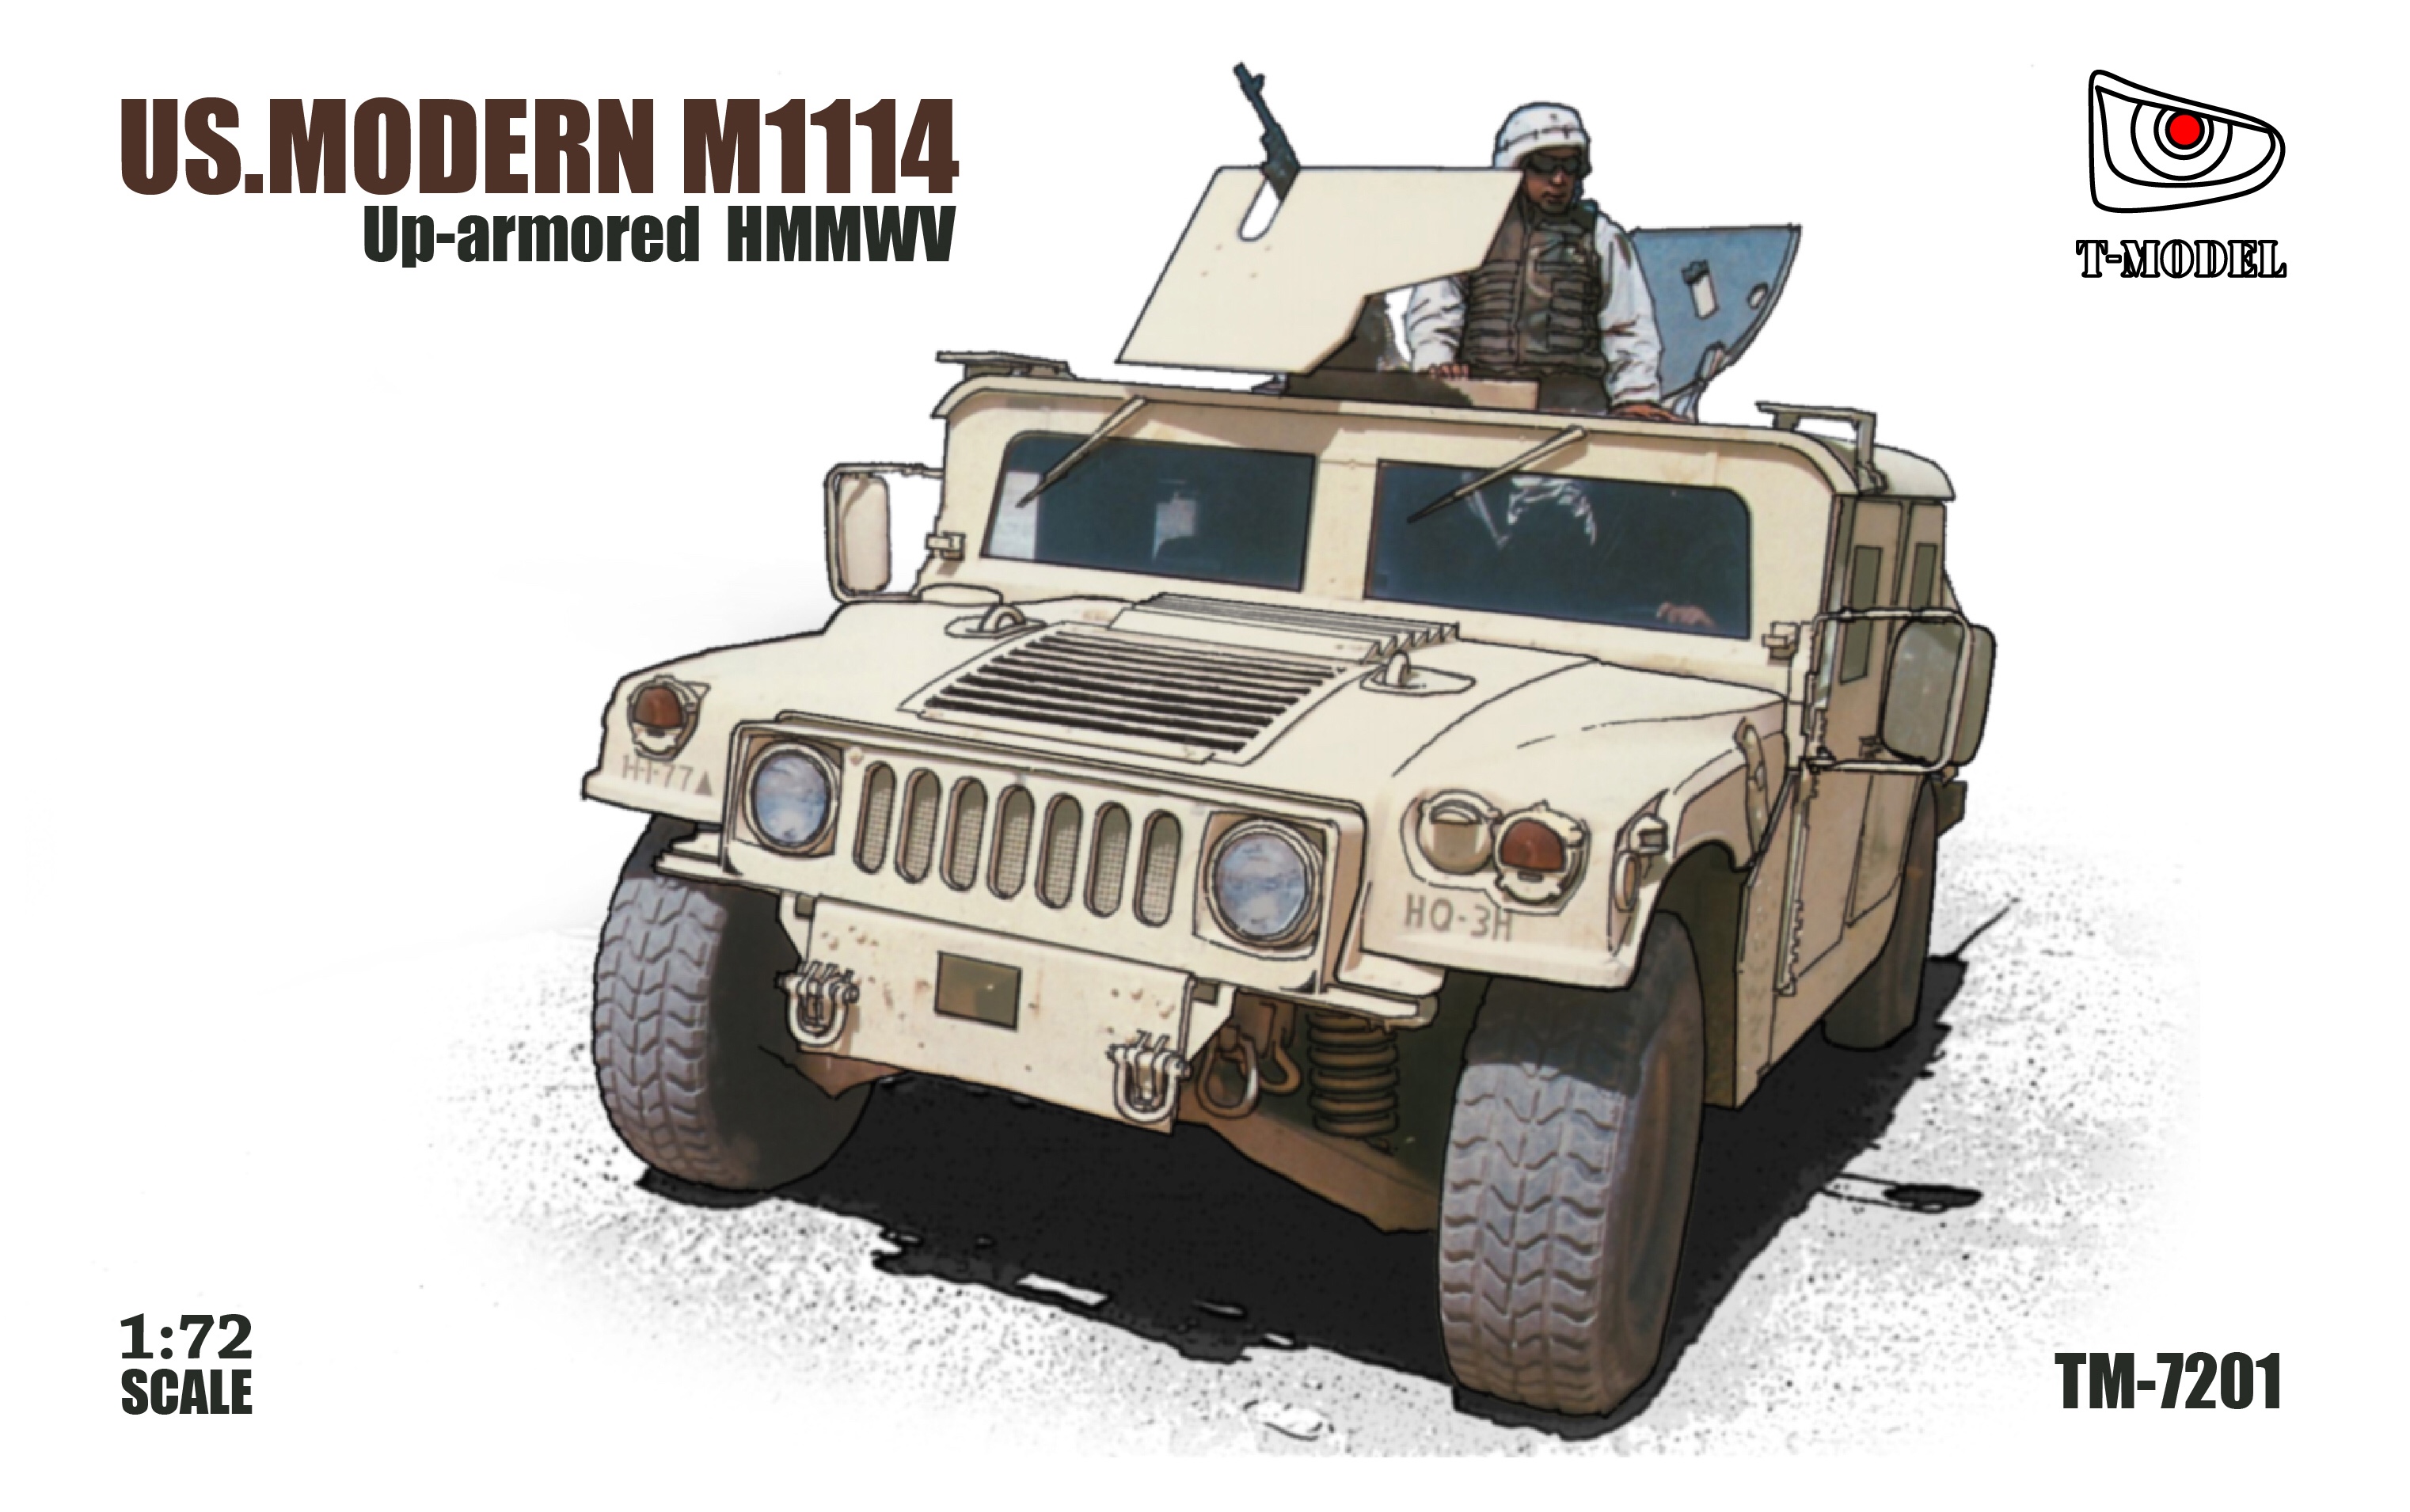 M1114 HMMWV uparmored